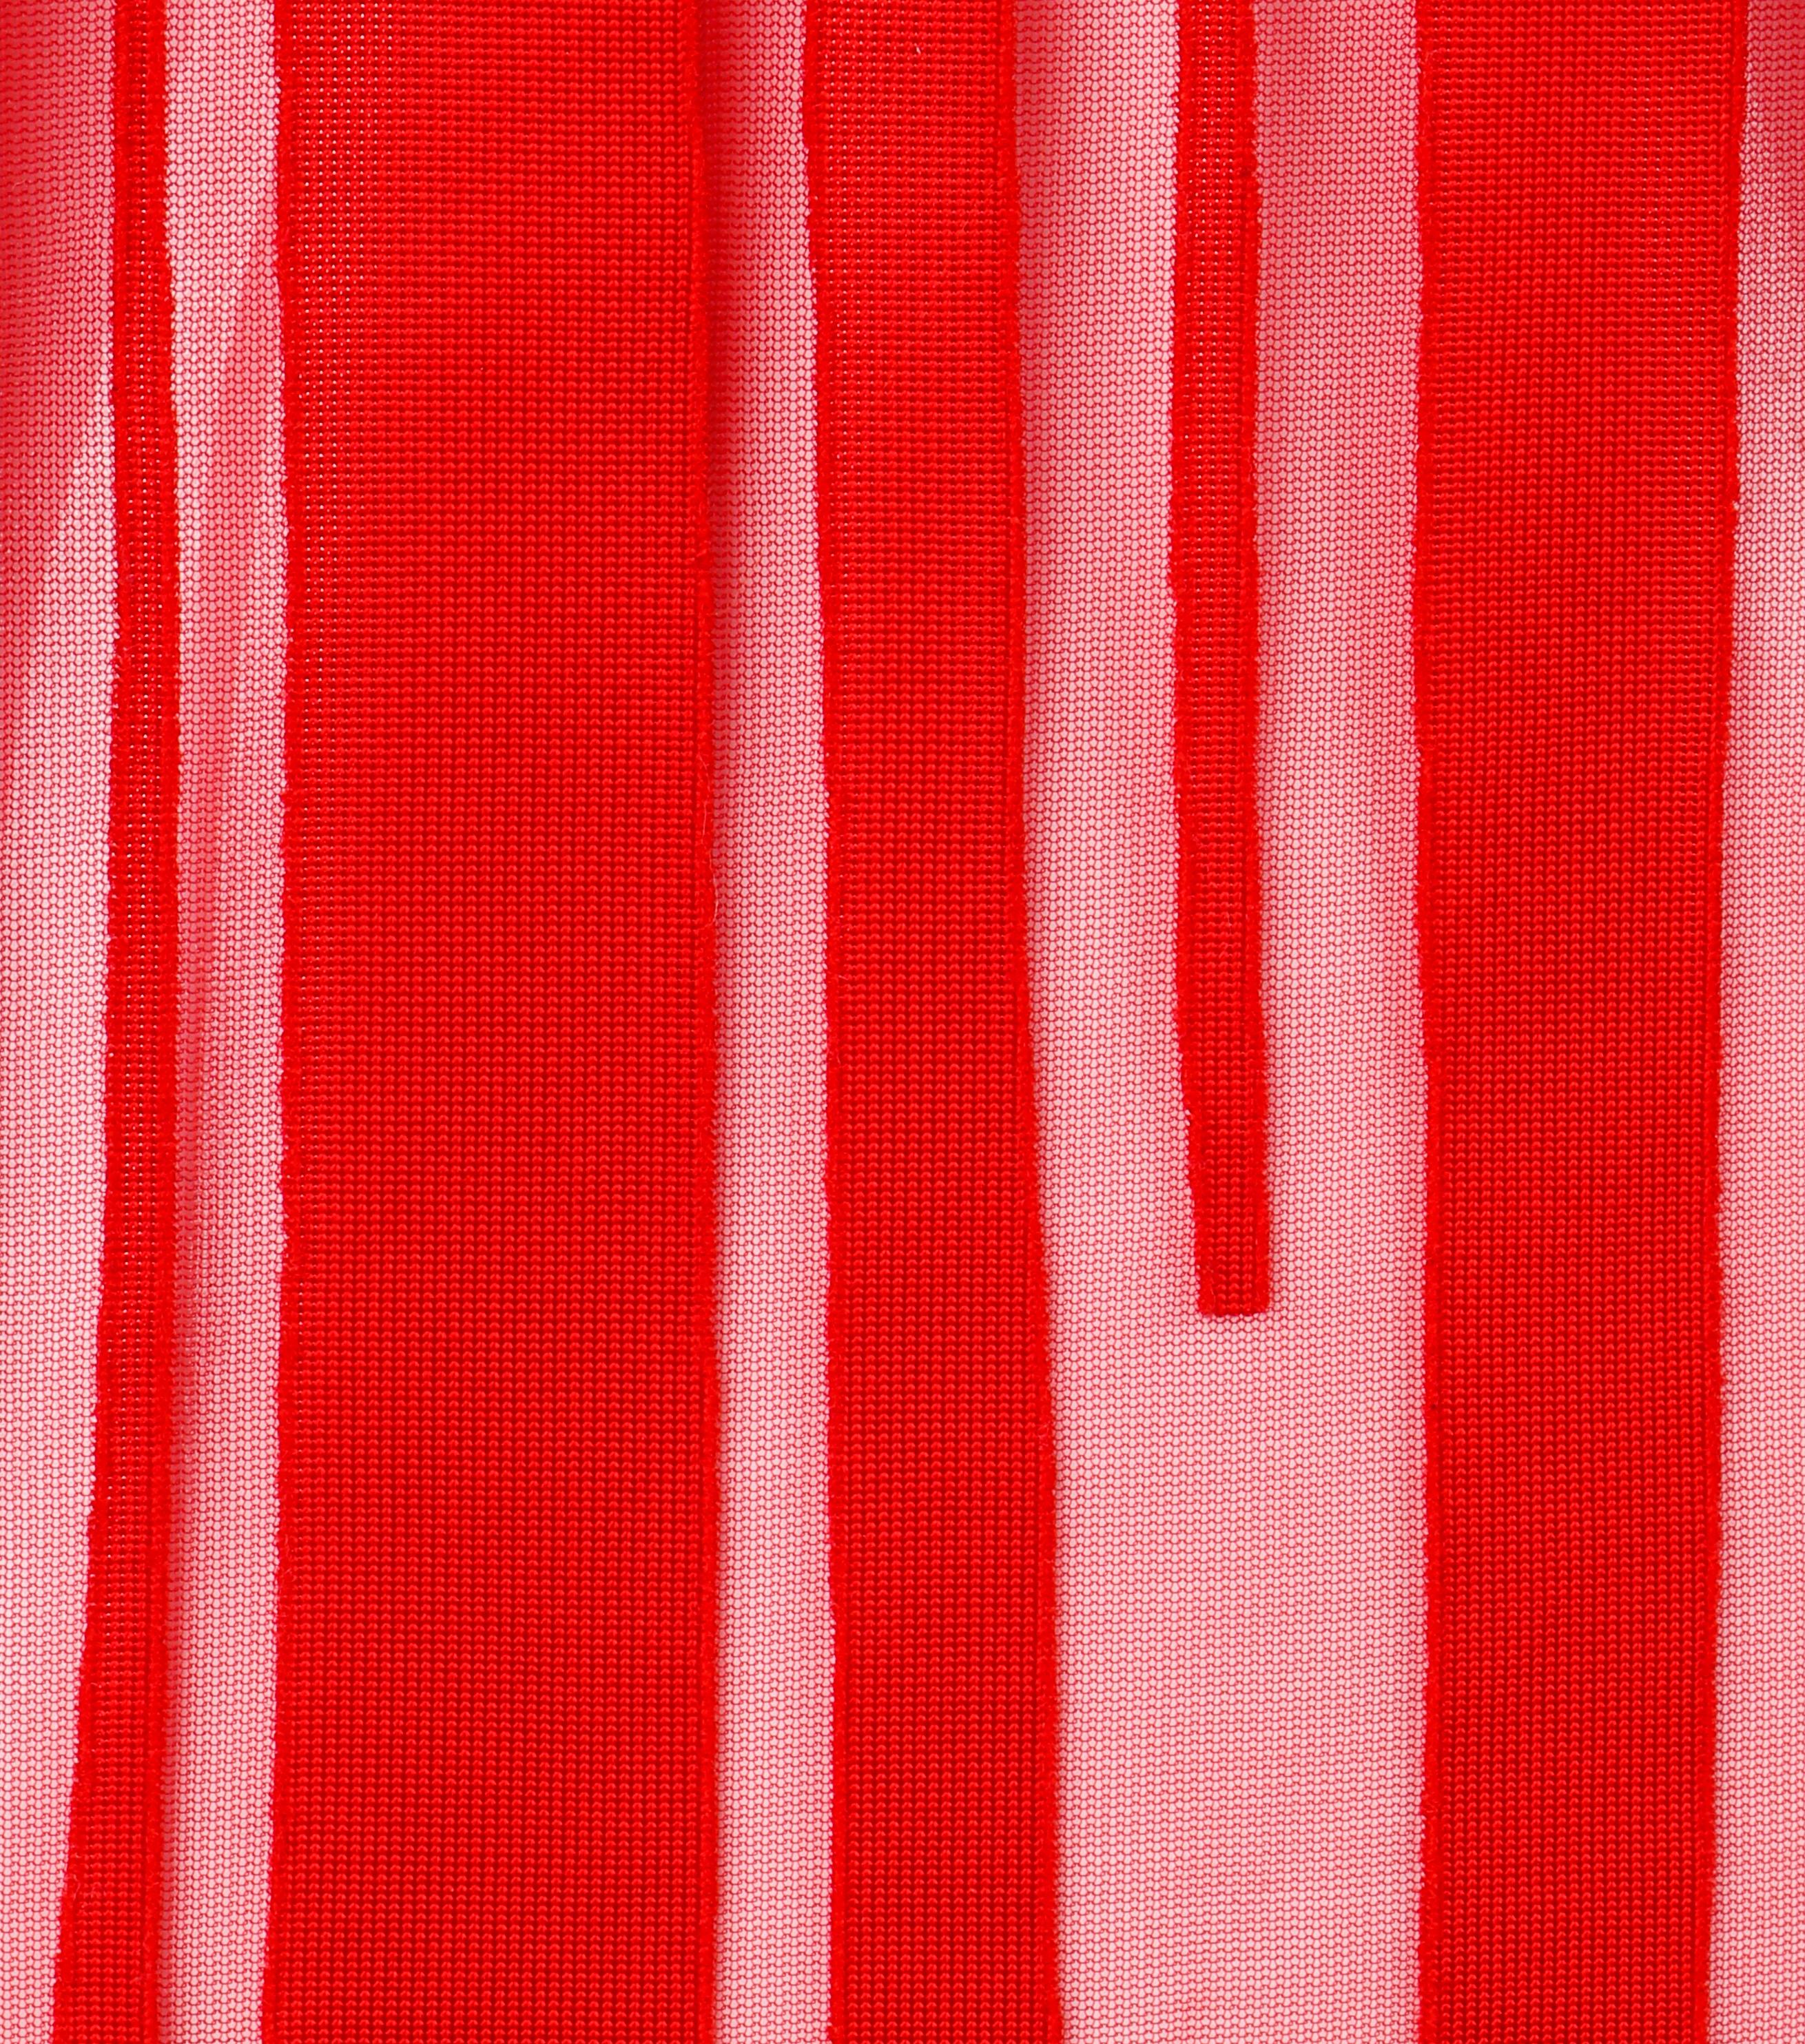 ALEXANDER McQUEEN S/S 1996 Red Semi Sheer Mesh Short Sleeve Shell Top For Sale 3